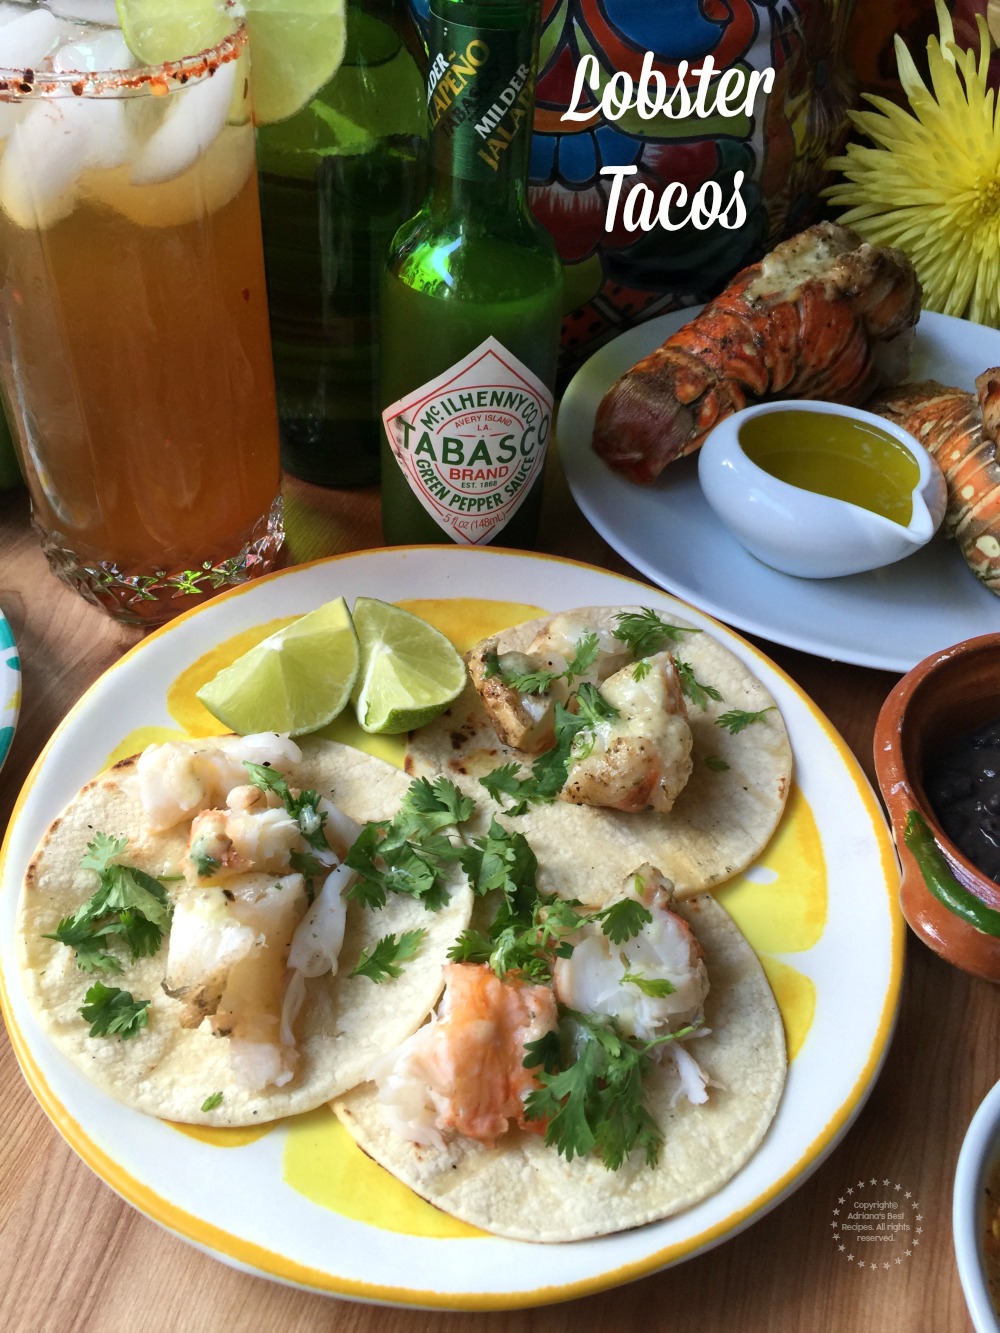 Tacos de Langosta sazonados con mantequilla, ajo y TABASCO Green Pepper Sauce